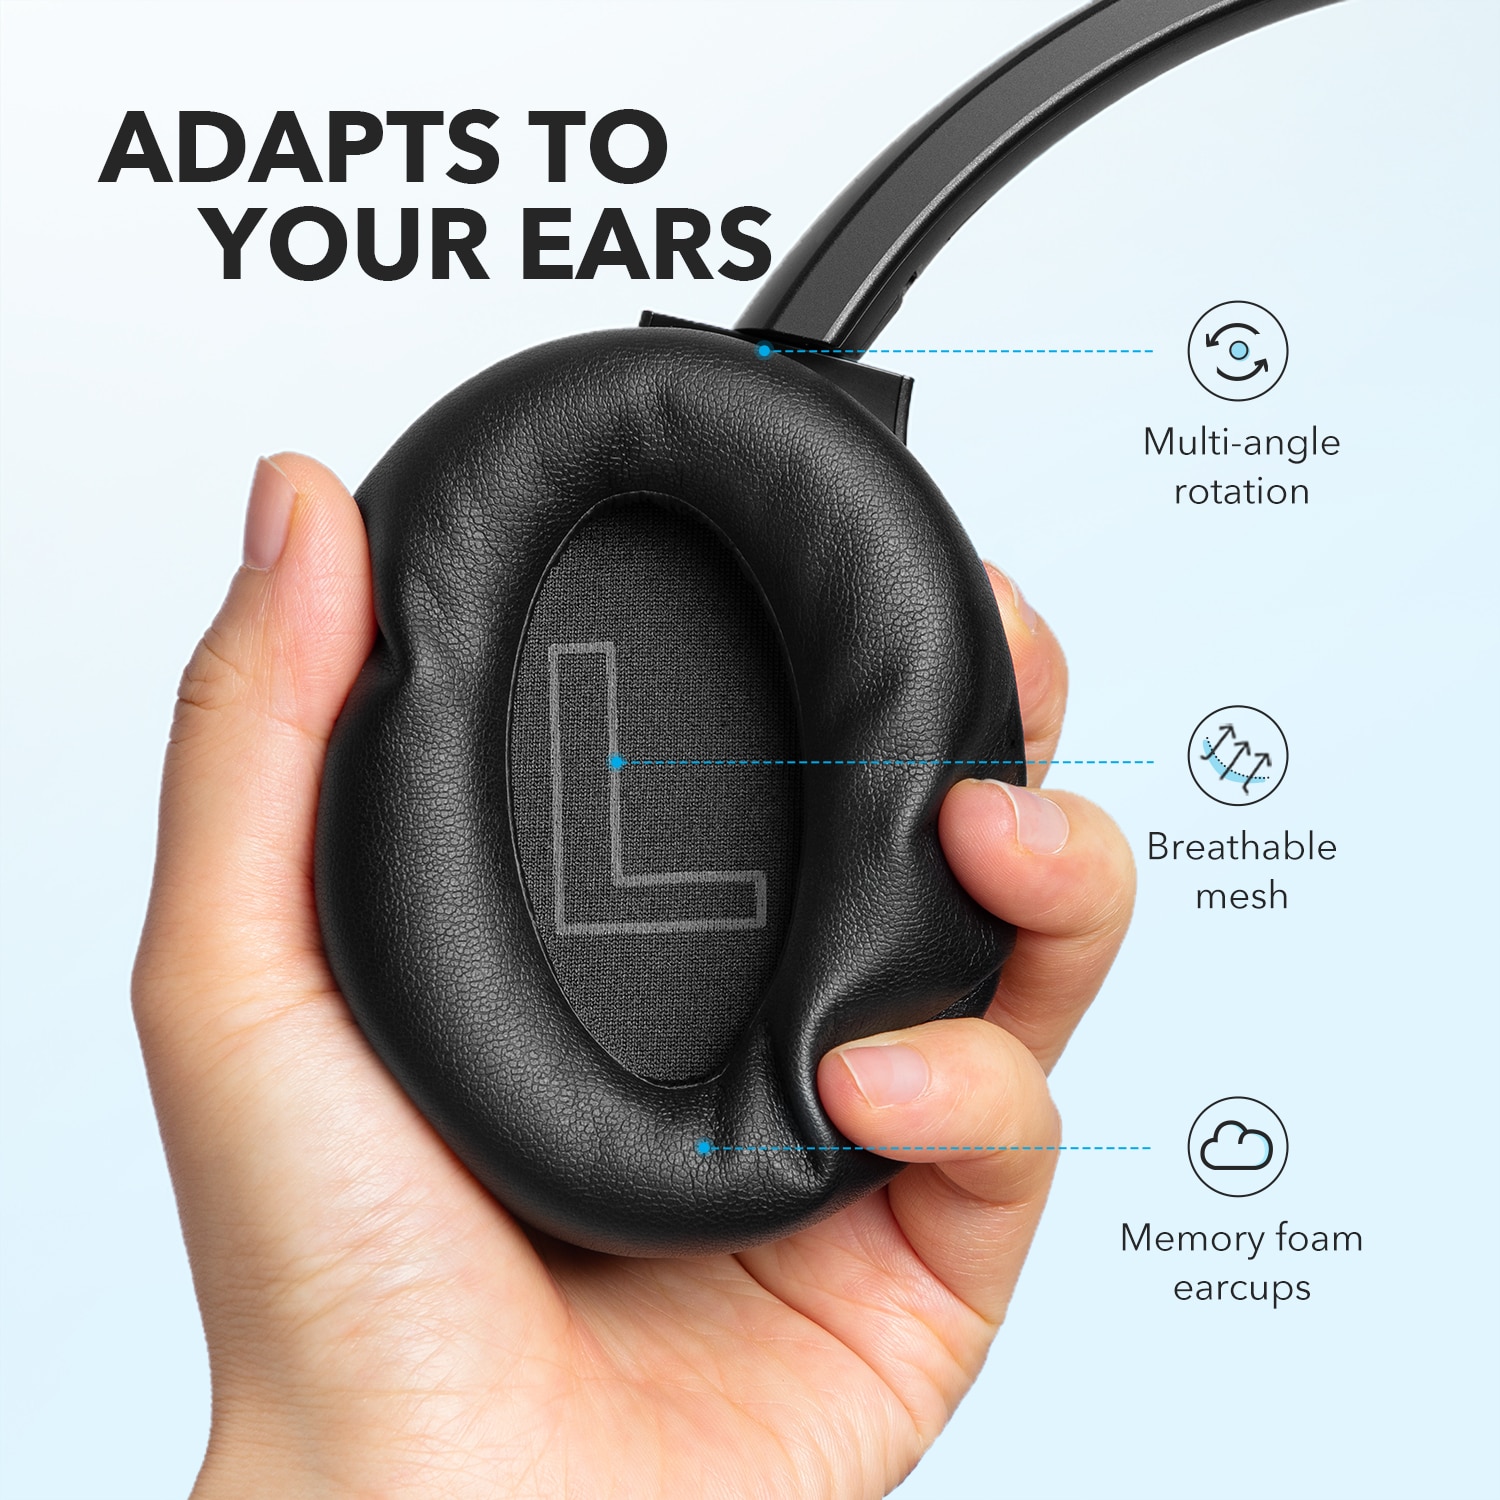 Wireless Noise Cancelling Headphones